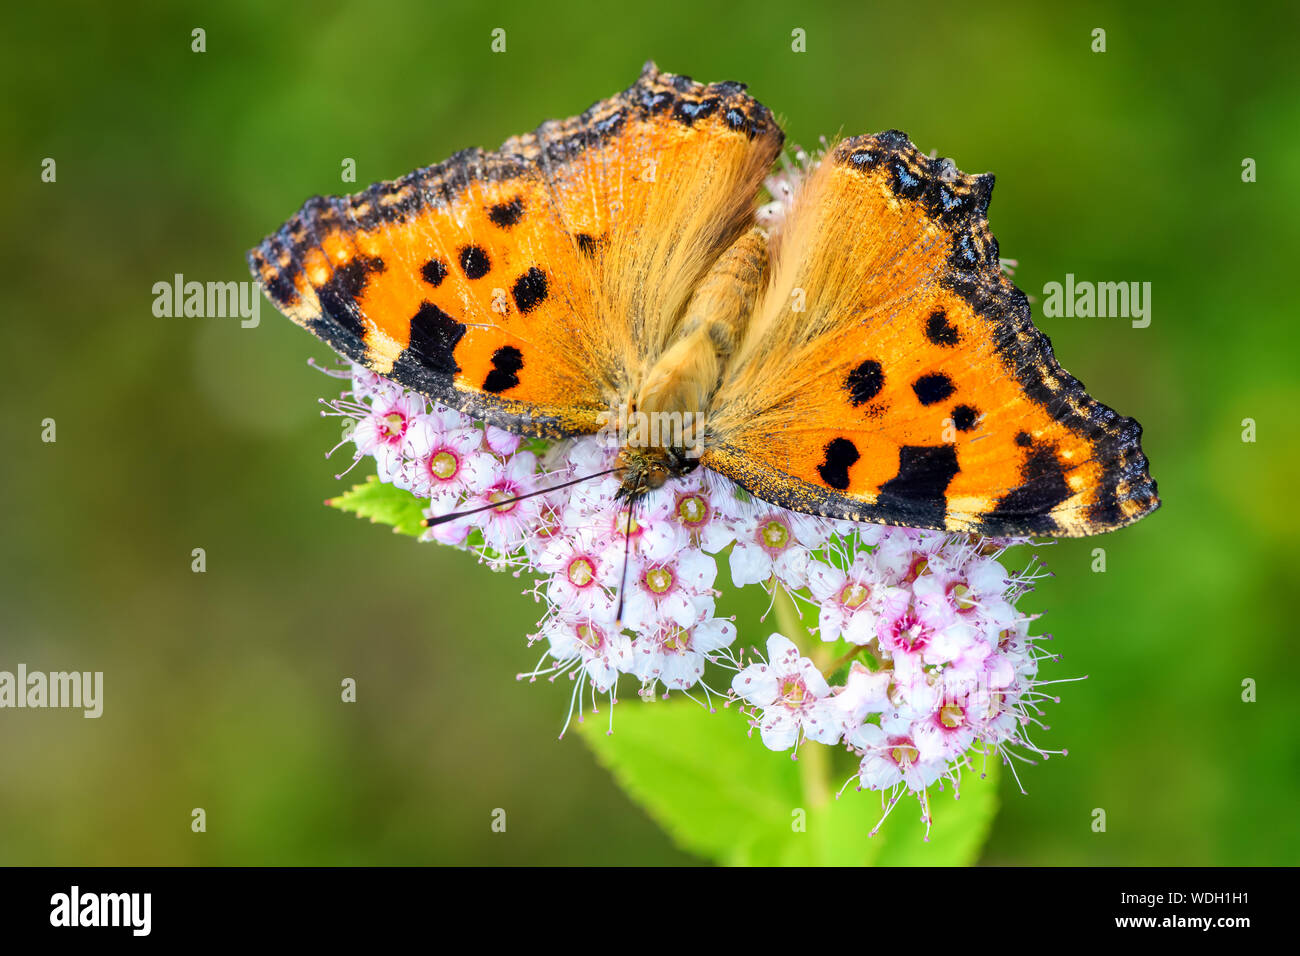 Grande Tartaruga - Nymphalis polychloros, bella brushfoot butterfly dall unione di prati e arbusti, Repubblica Ceca. Foto Stock